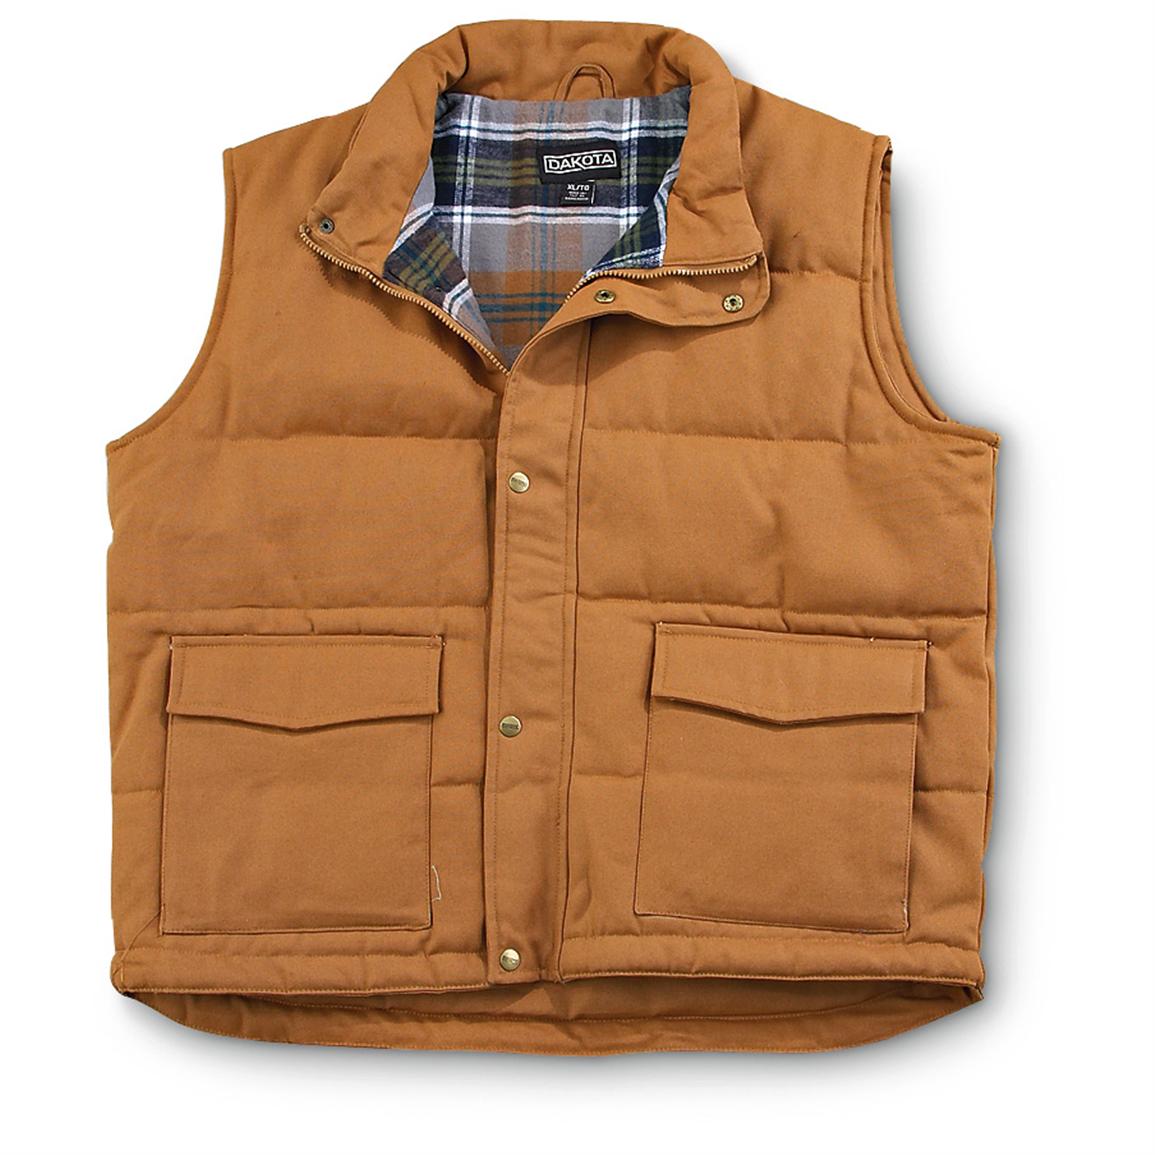 Cotton Duck Flannel Lined Work Vest 154074 Vests At Sportsman S Guide